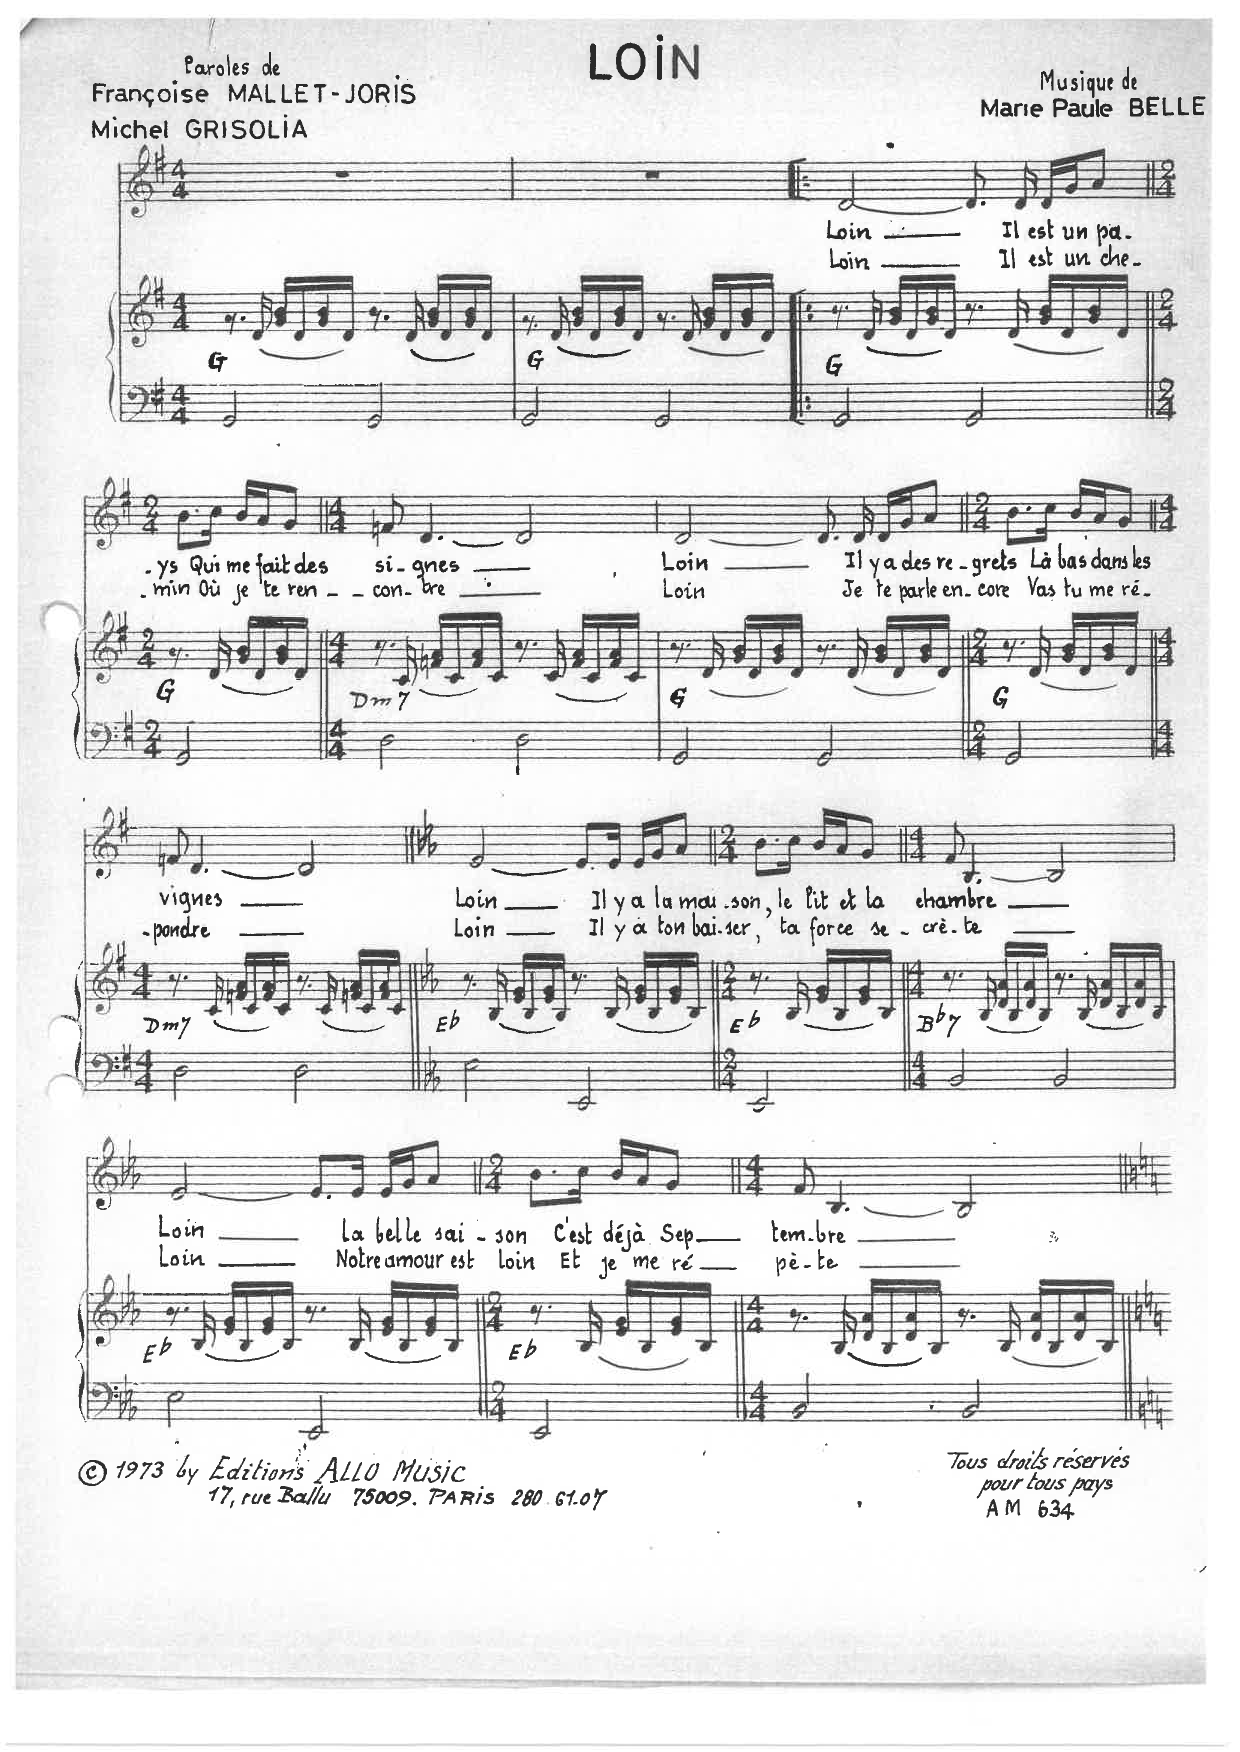 Michel Grisolia, Françoise Mallet-Joris, Marie Paule Belle Loin Sheet Music Notes & Chords for Piano & Vocal - Download or Print PDF